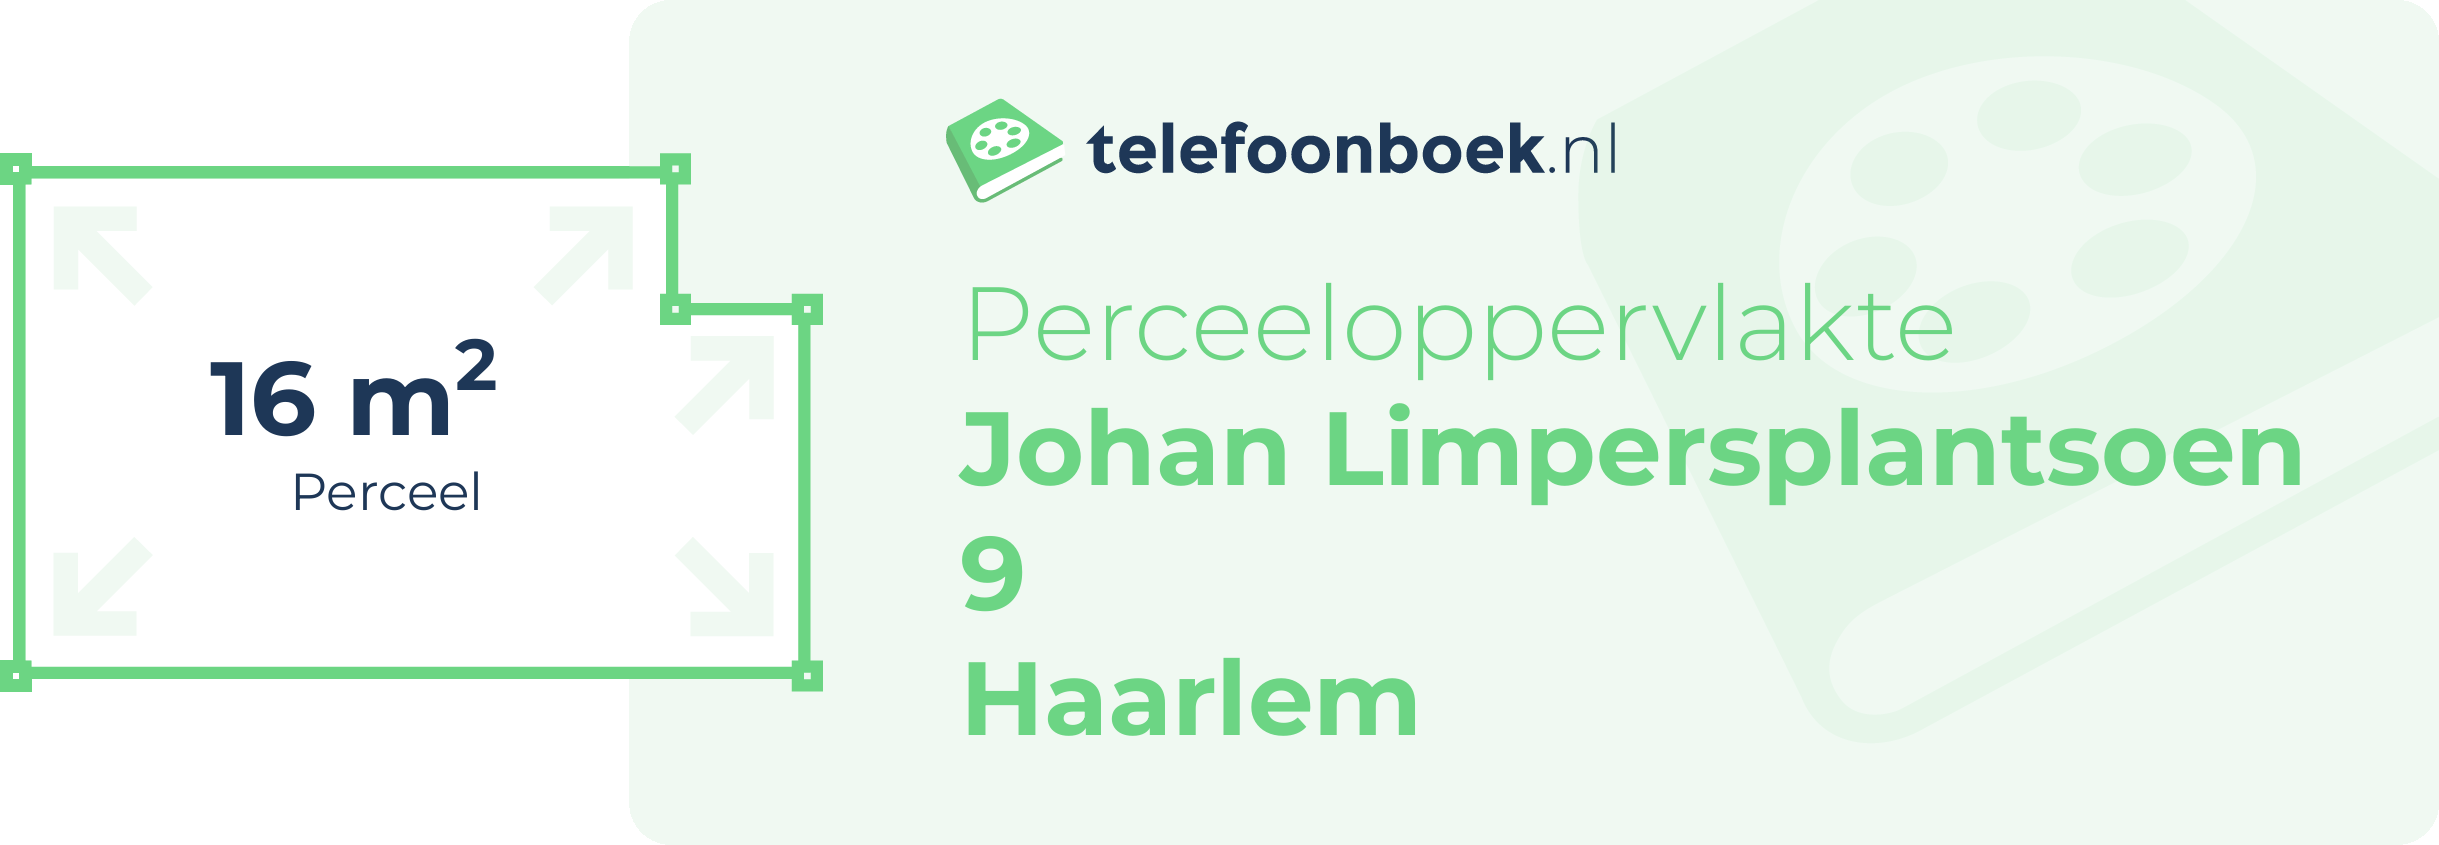 Perceeloppervlakte Johan Limpersplantsoen 9 Haarlem